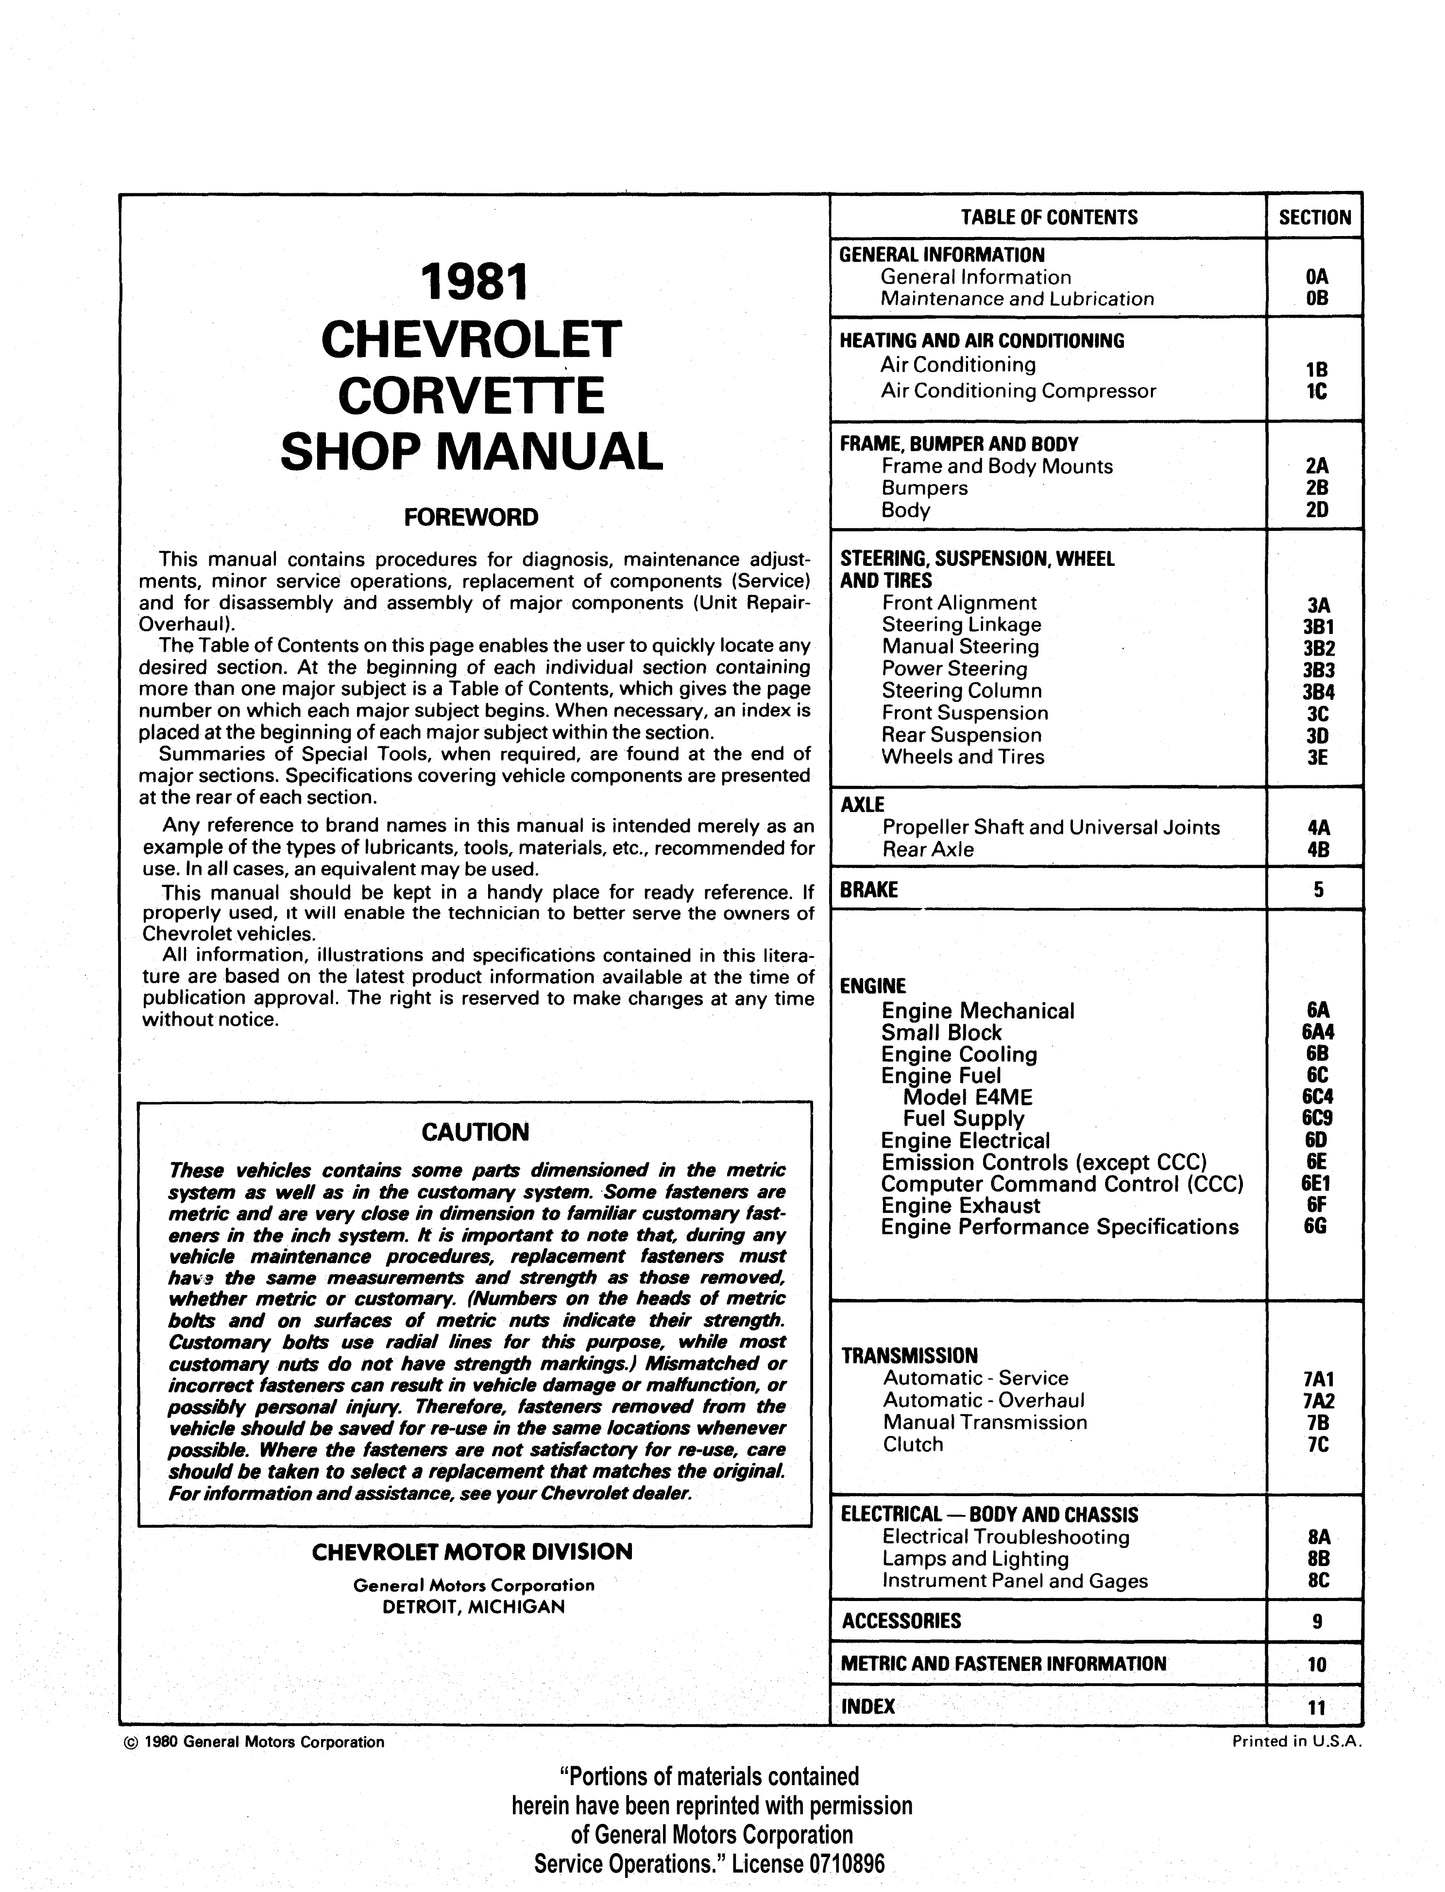 1978, 1979, 1980, 1981, 1982 Chevrolet Corvette Factory Assembly Manuals